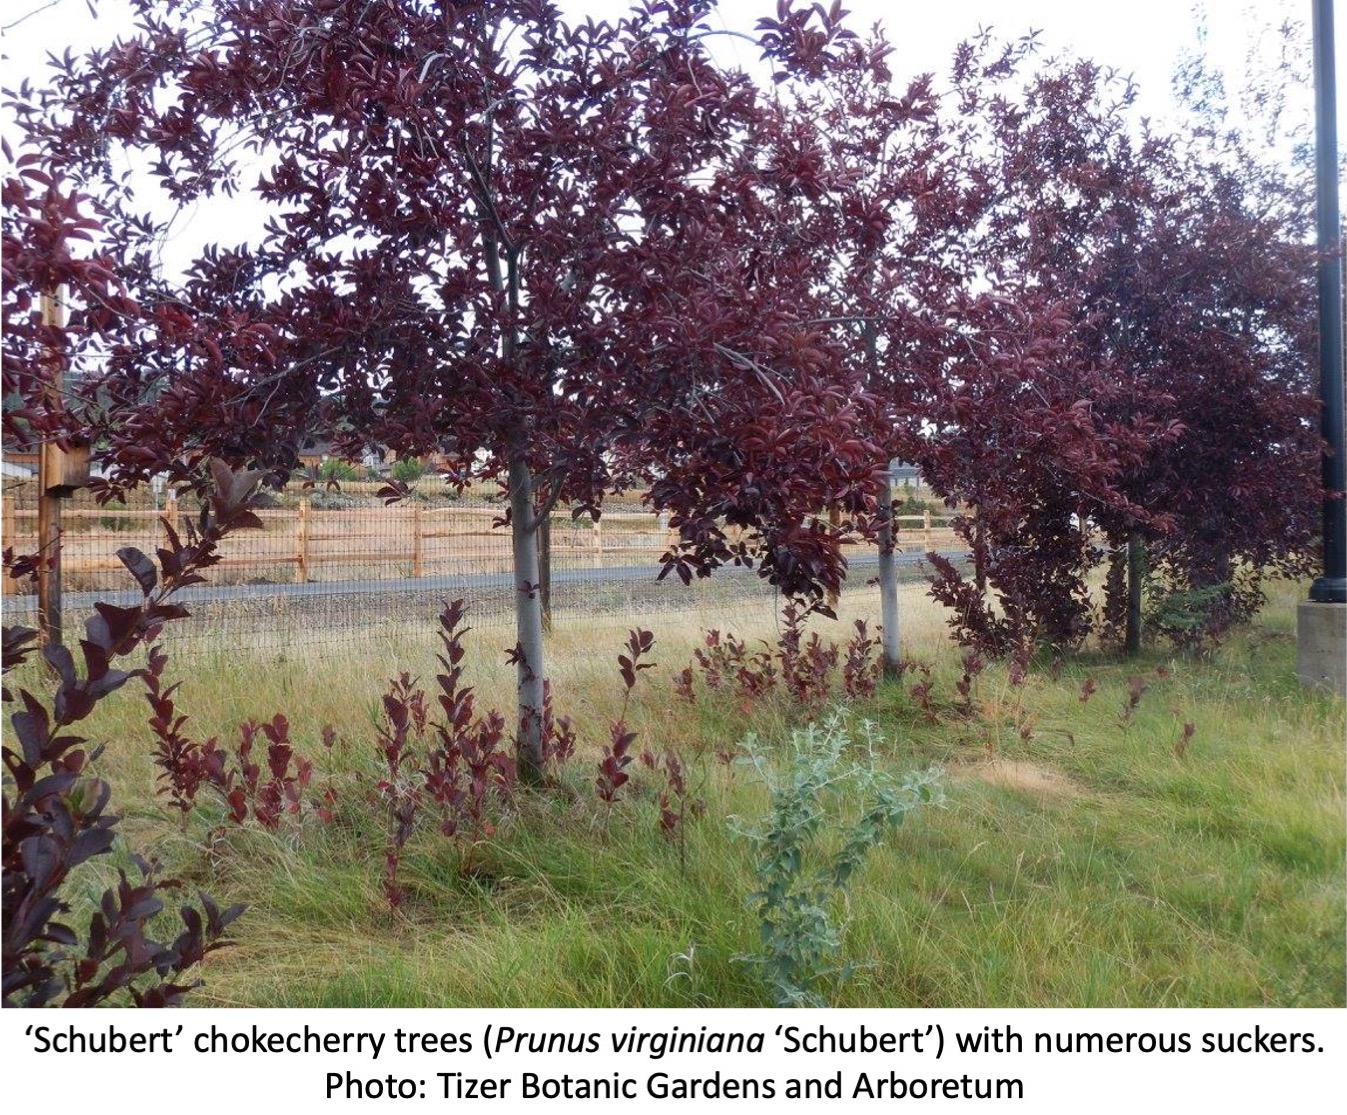 ‘Schubert’ chokecherry trees with numerous suckers.